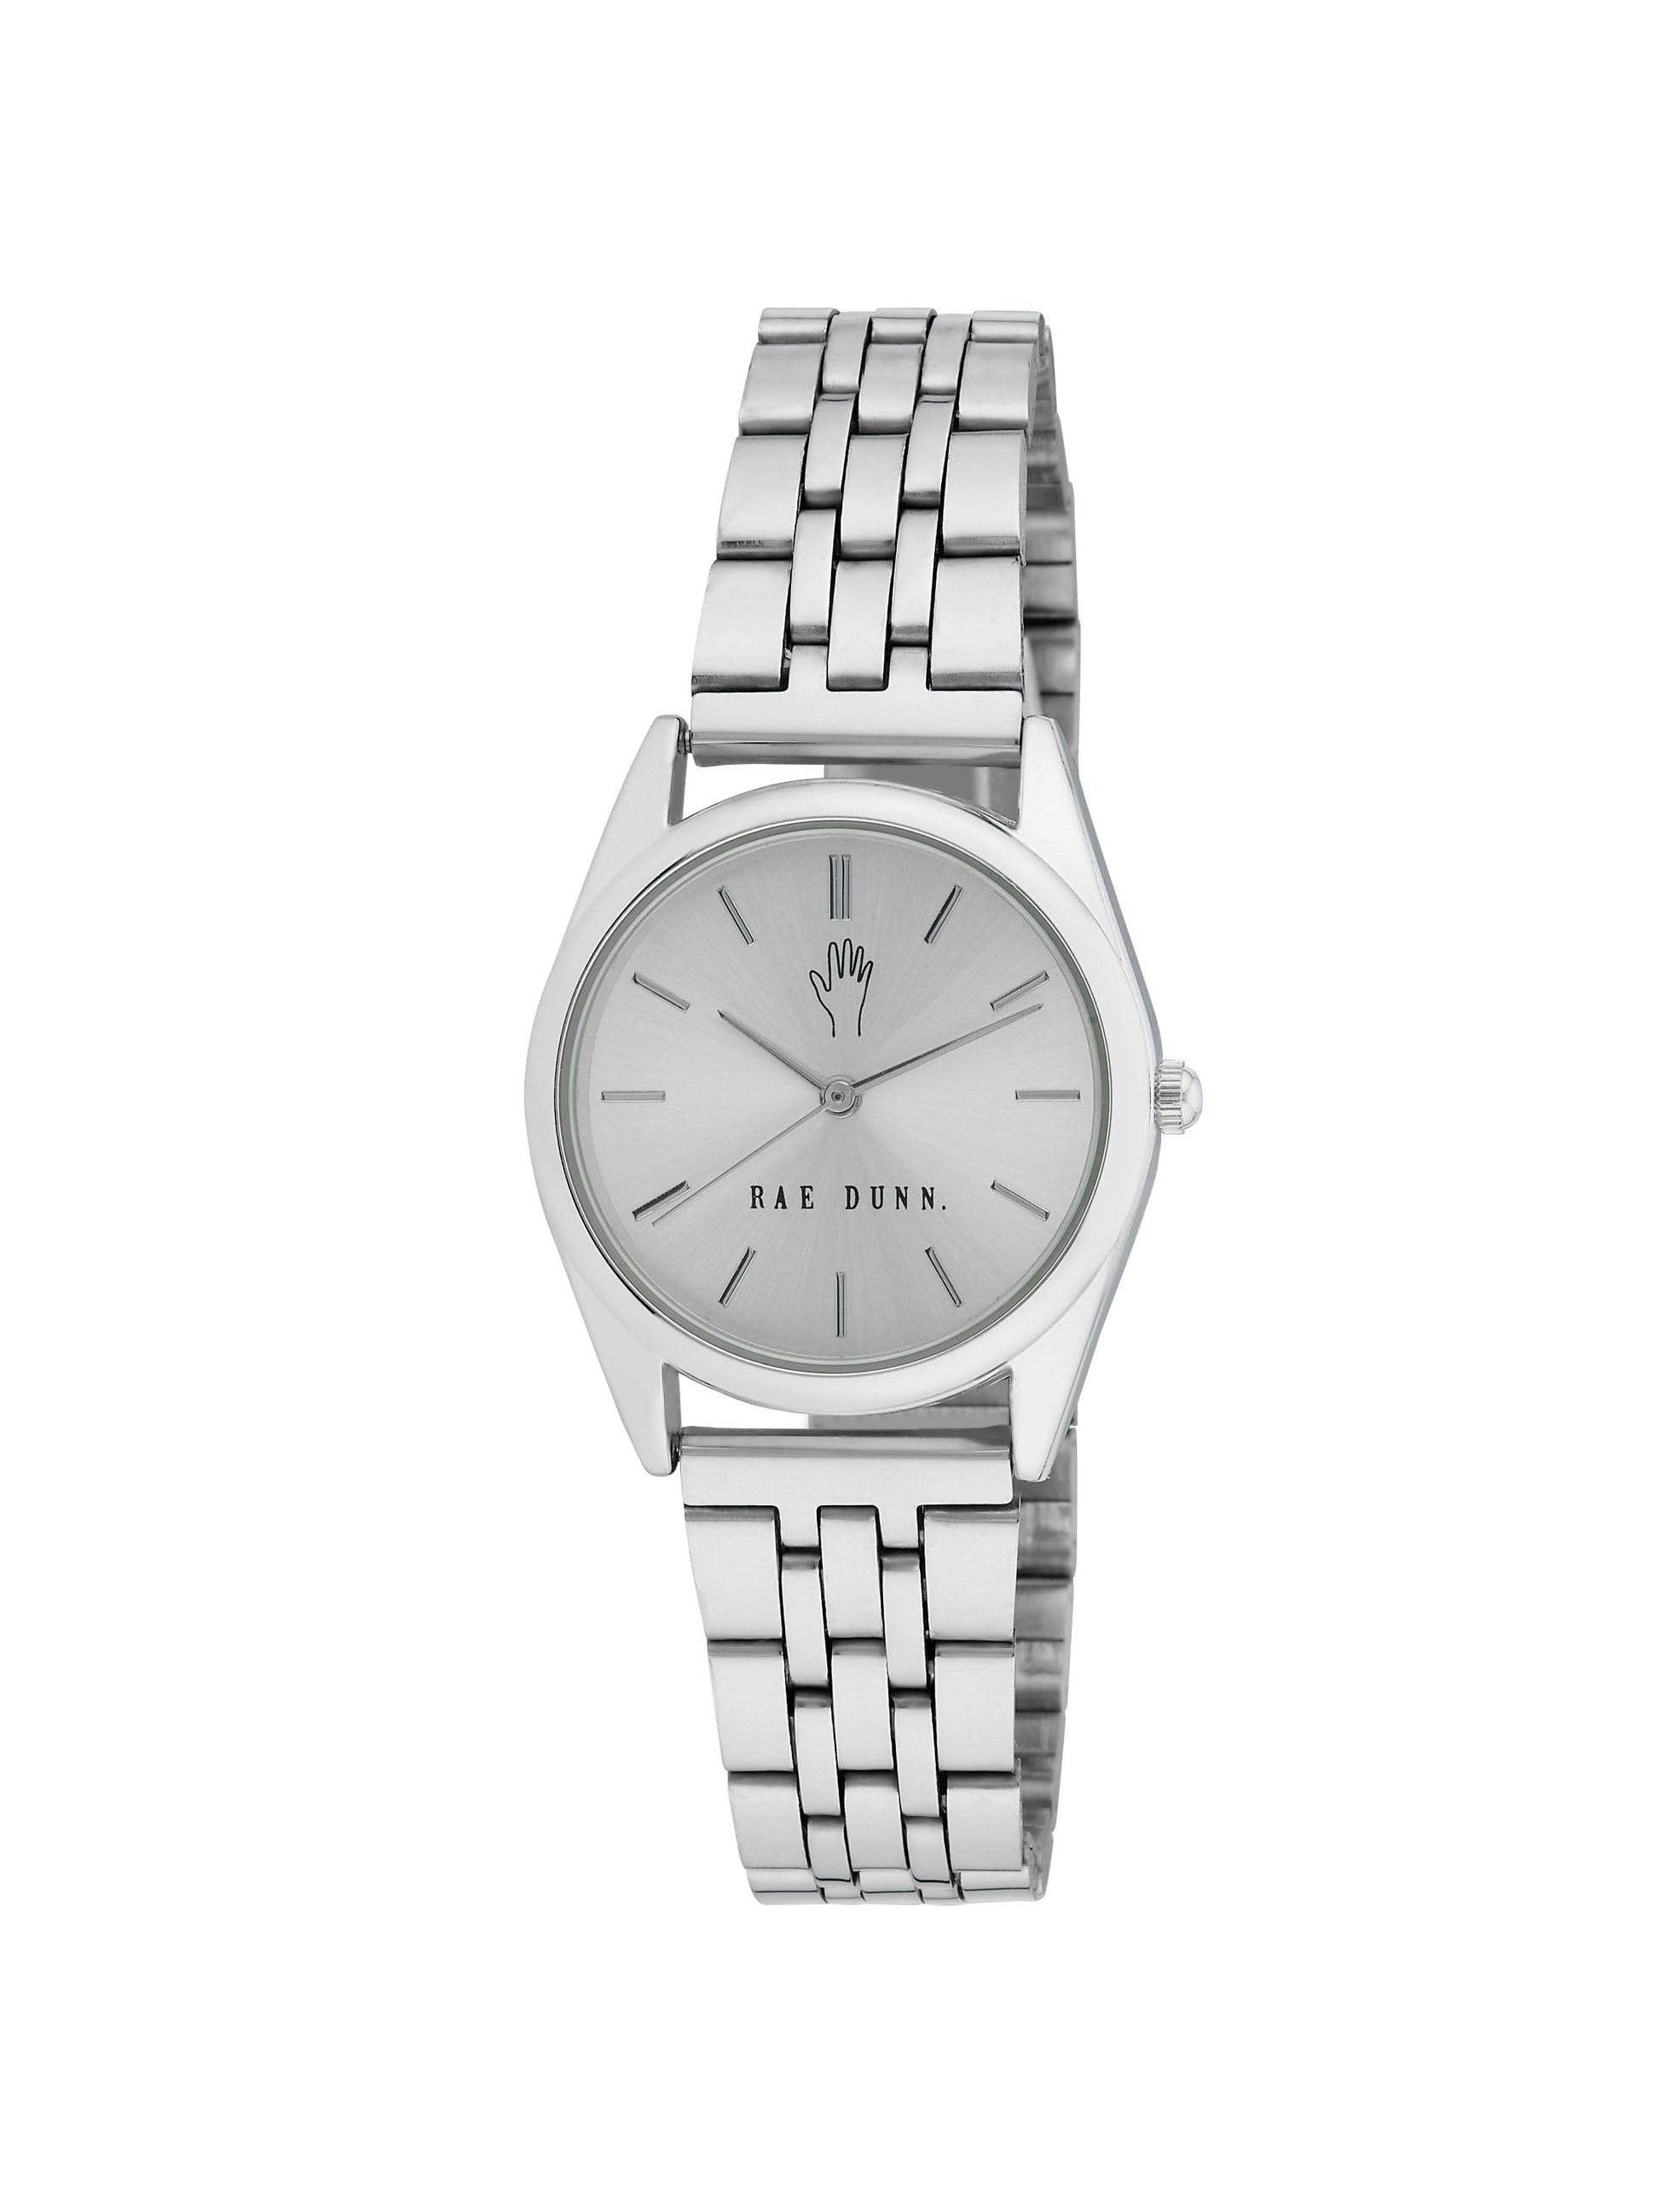 CHLOE Round Face Link Watch in Silver, 30mm - Rae Dunn Wear - Watch